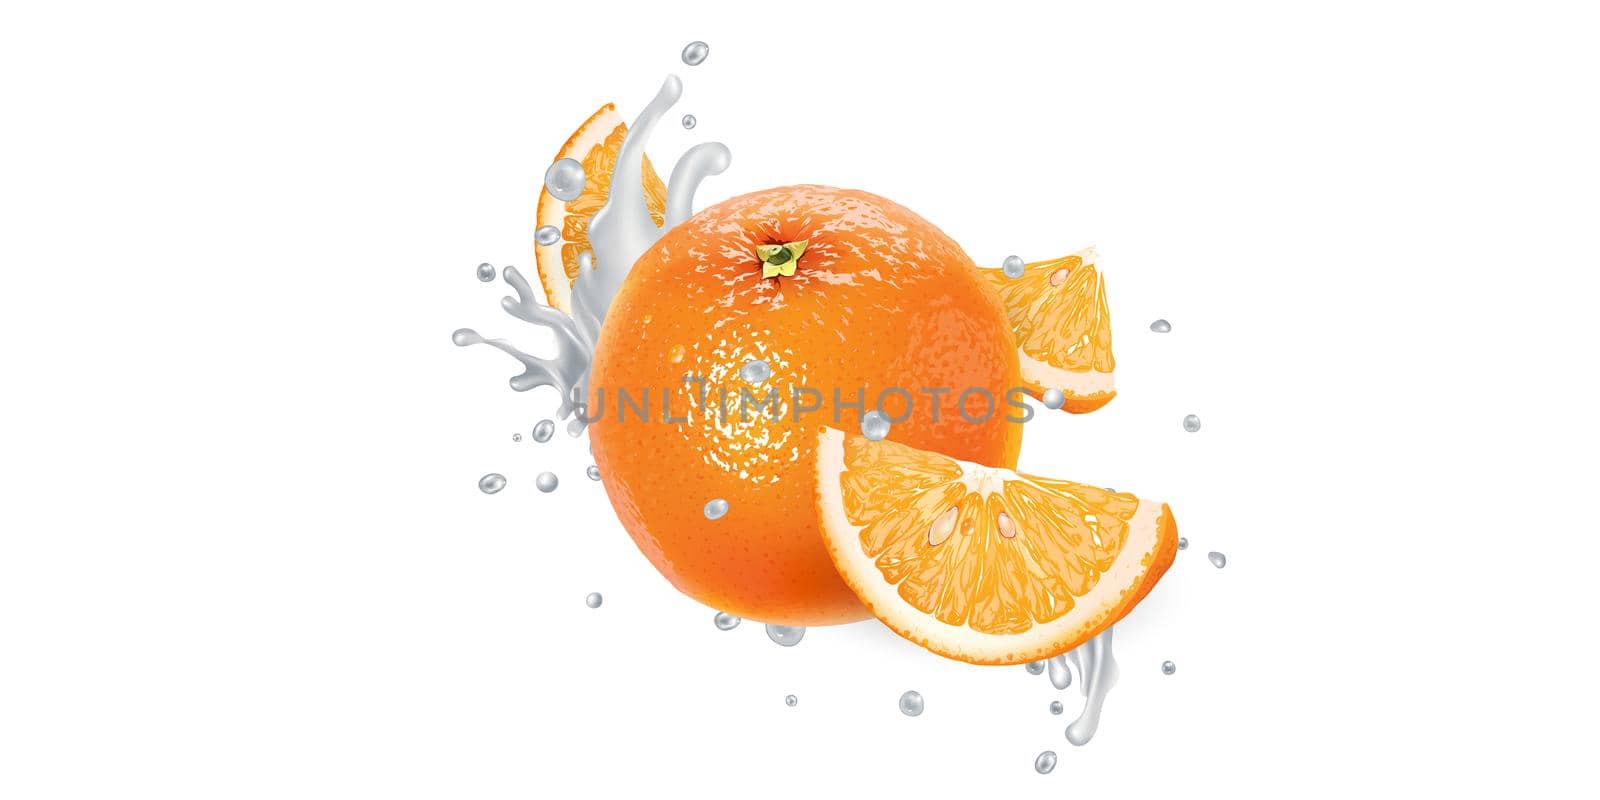 Orange in splashes of yogurt or milk. by ConceptCafe